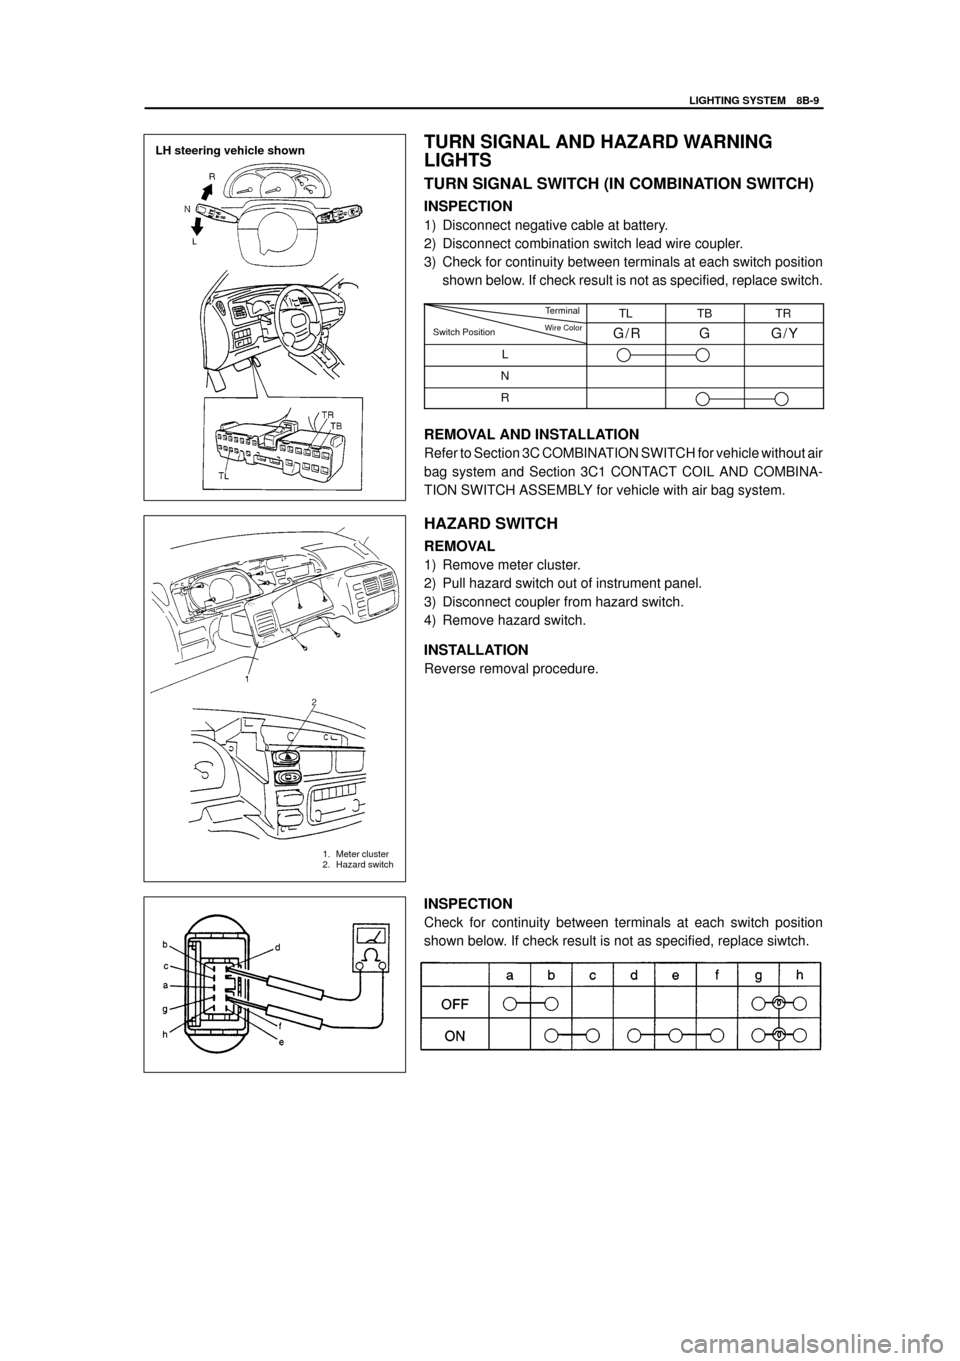 SUZUKI GRAND VITARA 1999 2.G Service Manual Online YH4
GRAND
VITARA
1. Meter cluster
2. Hazard switch
Terminal
Wire ColorSwitch Position
LH steering vehicle shown
LIGHTING SYSTEM 8B-9
TURN SIGNAL AND HAZARD WARNING
LIGHTS
TURN SIGNAL SWITCH (IN COMBIN